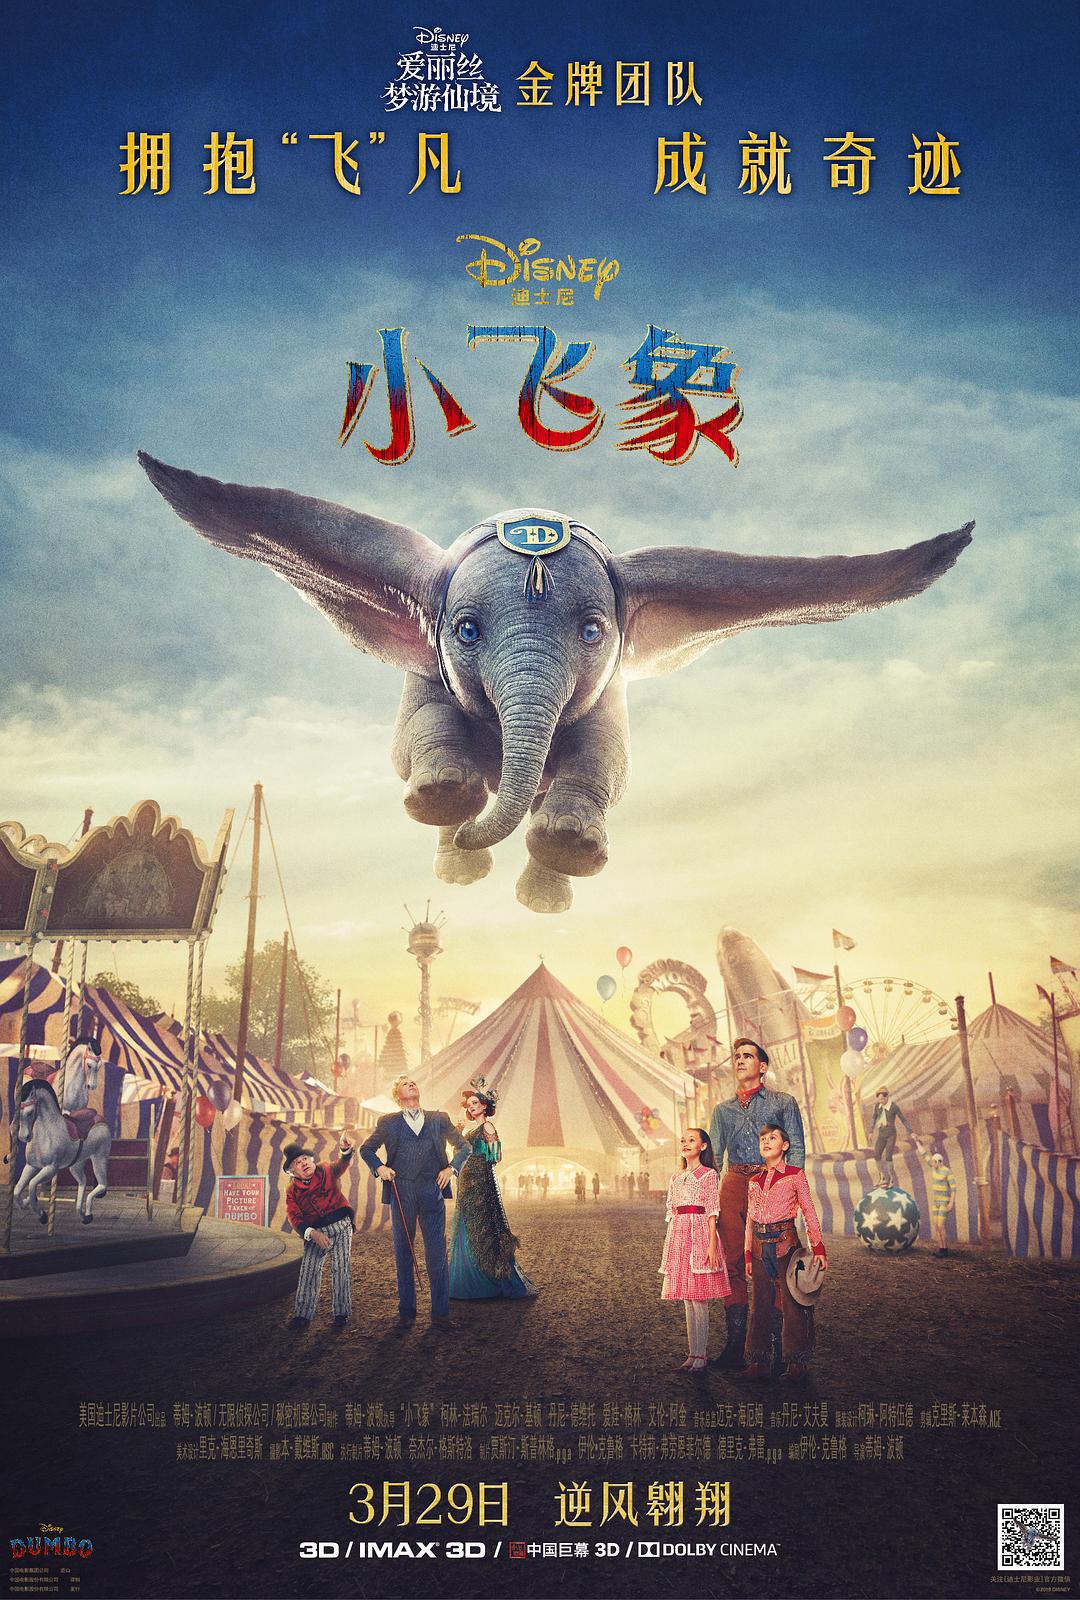 小飞象/小飞象真人版 Dumbo.2019.720p.BluRay.x264-SPARKS 5.47GB-1.png